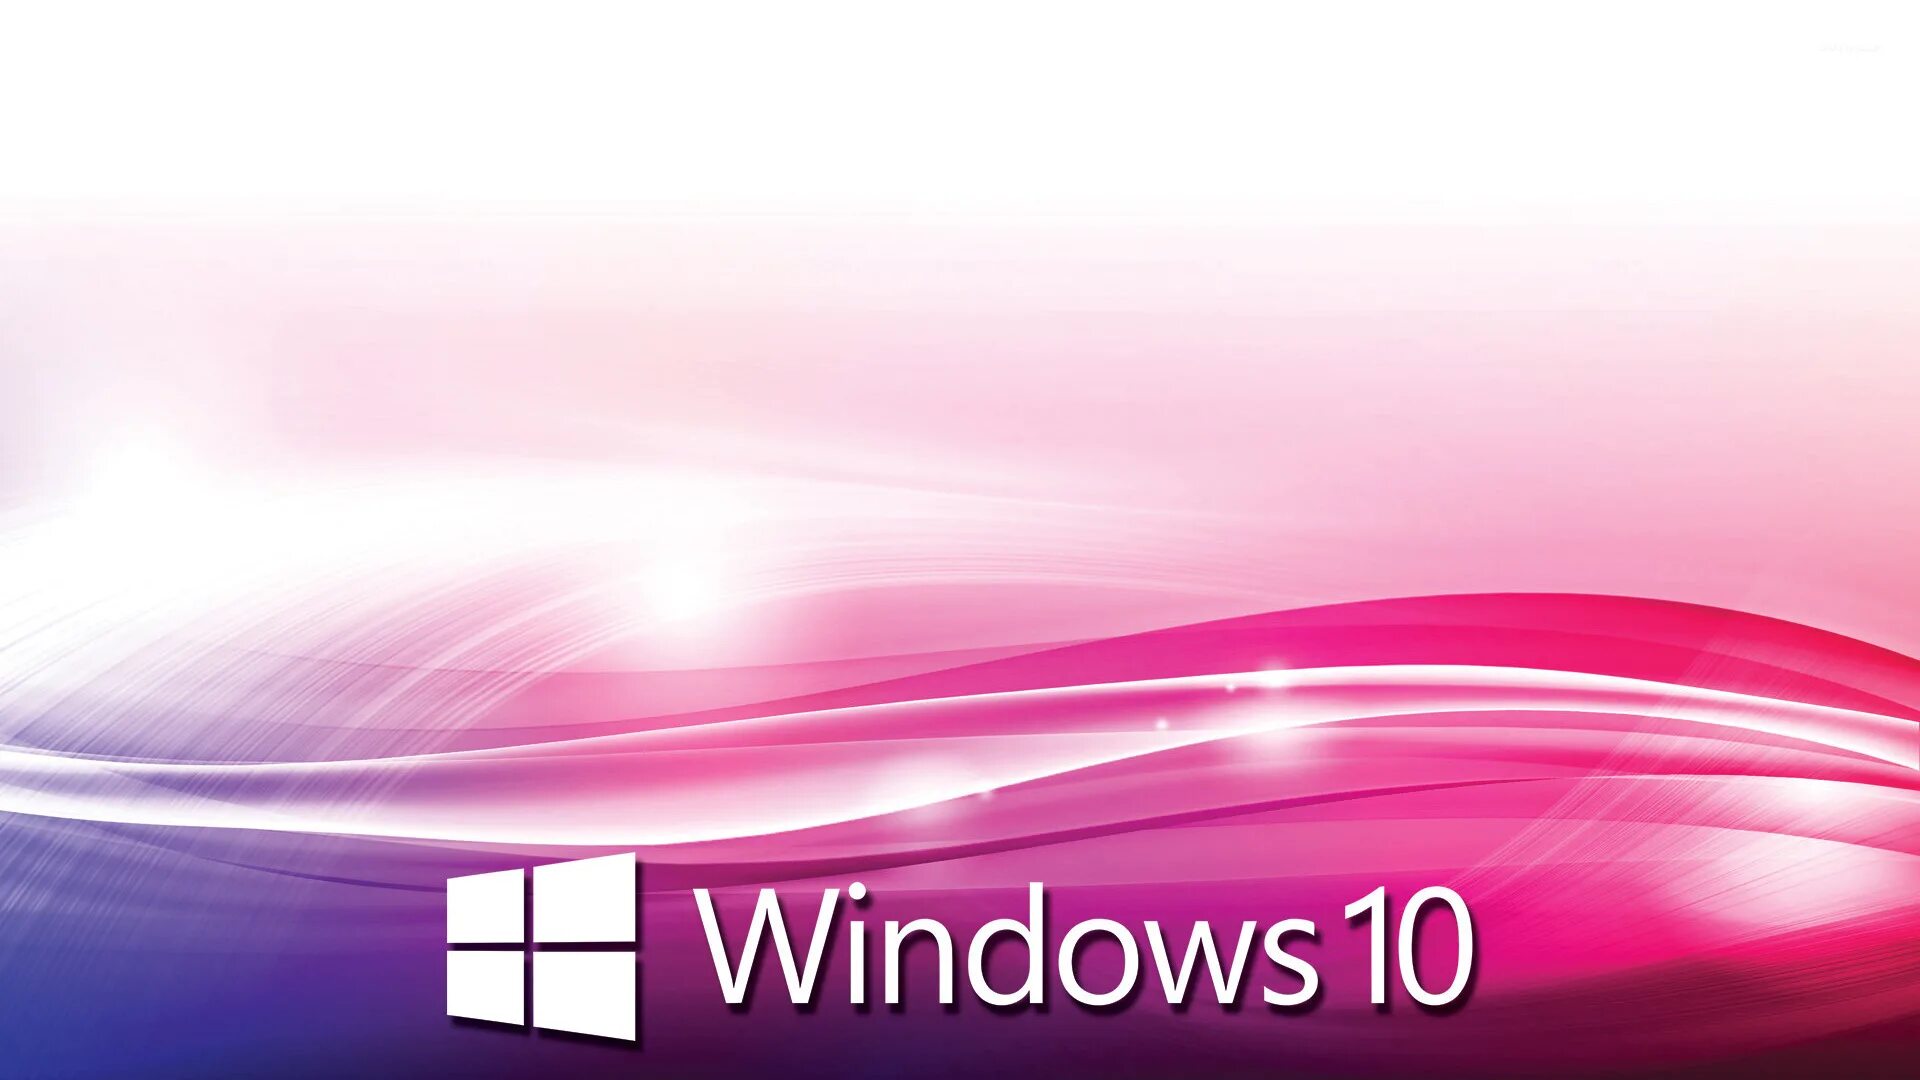 Обои виндовс 10. Фон Windows 10. Картинки Windows 10. Классические обои Windows 10.